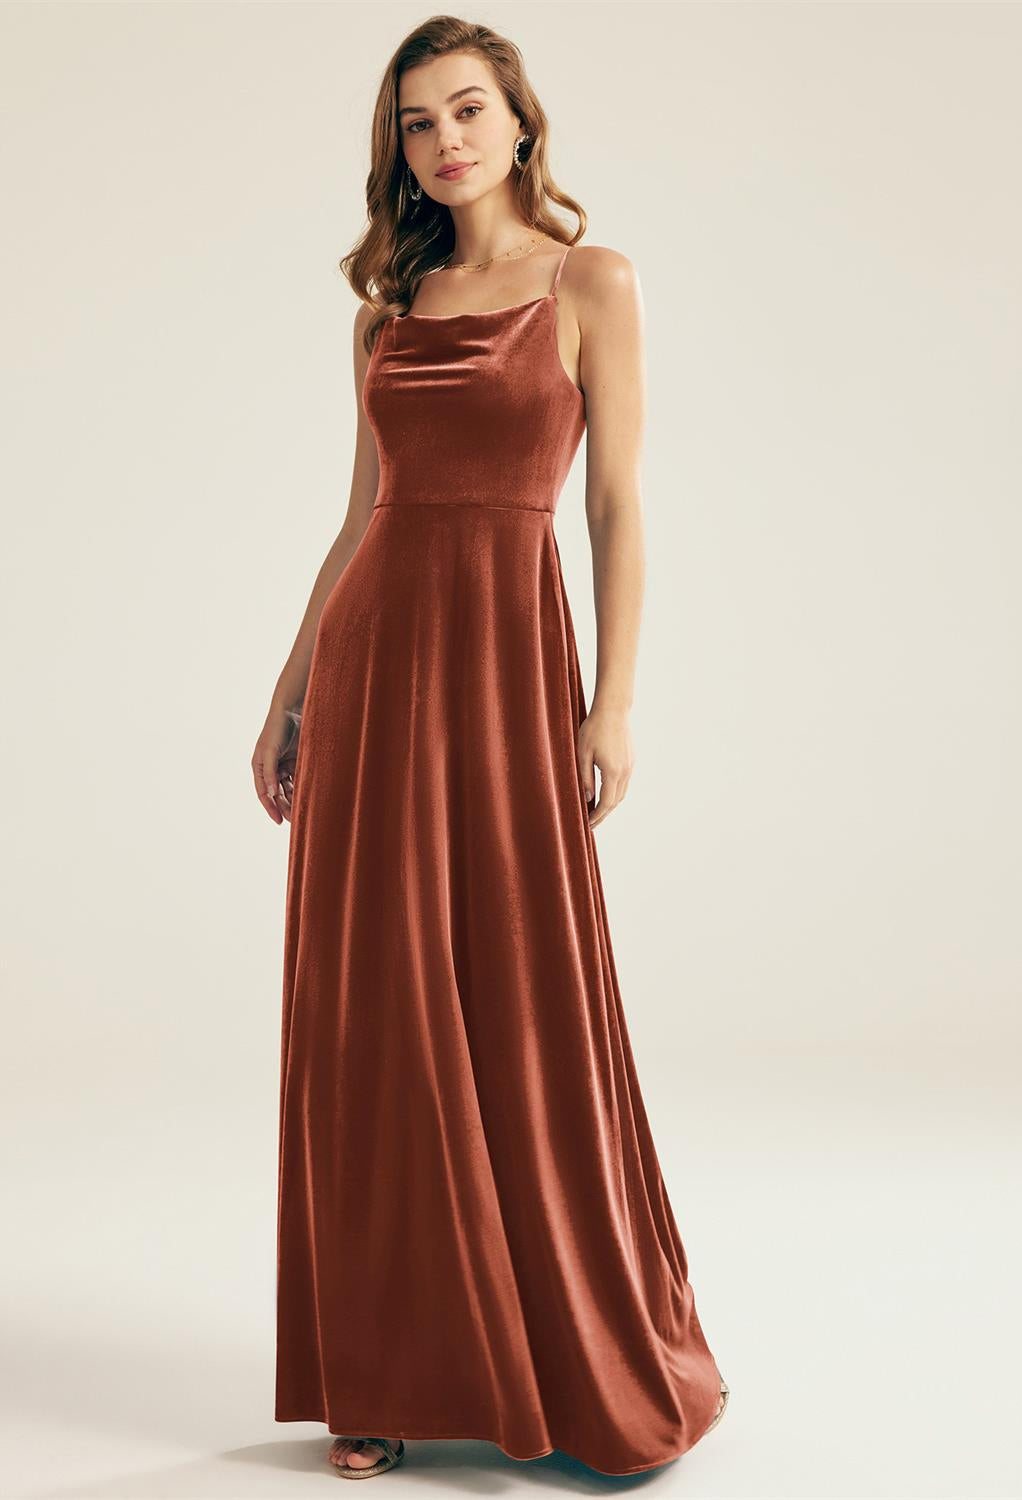 Leeward - Velvet Bridesmaid Dress - Off The Rack, available at Bergamot Bridal.